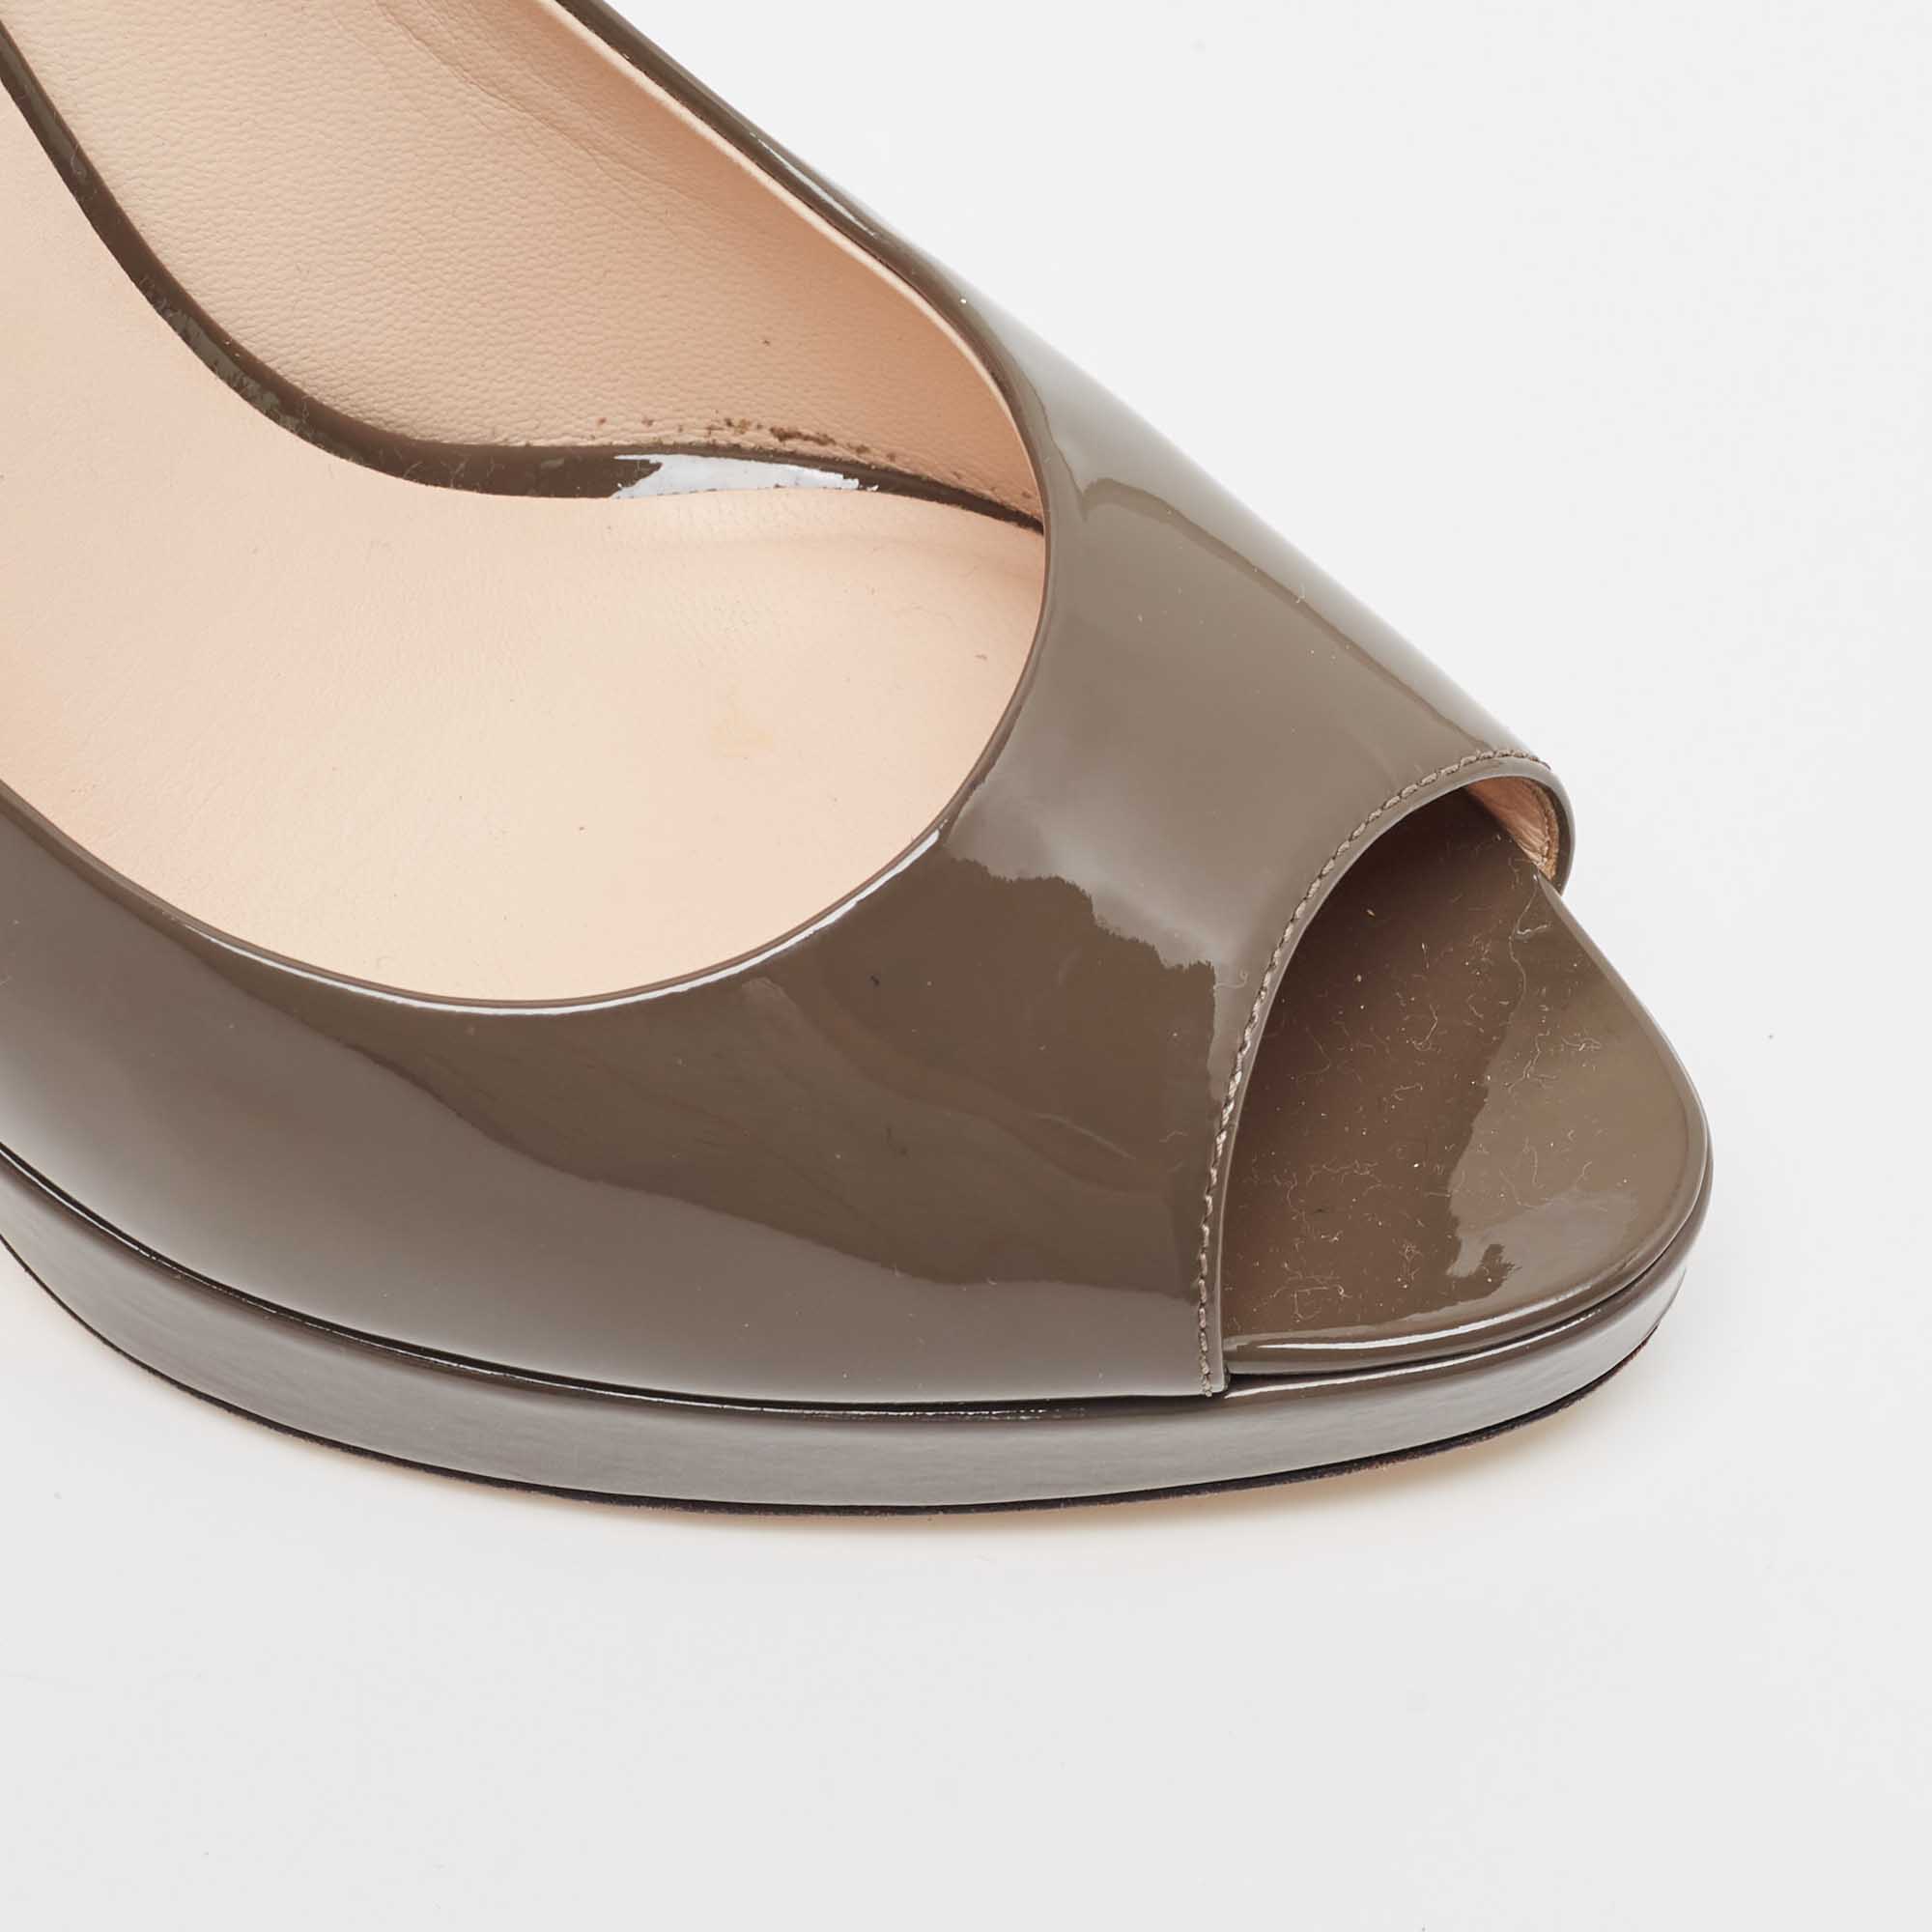 Fendi Brown Patent Leather Peep Toe Pumps Size 37